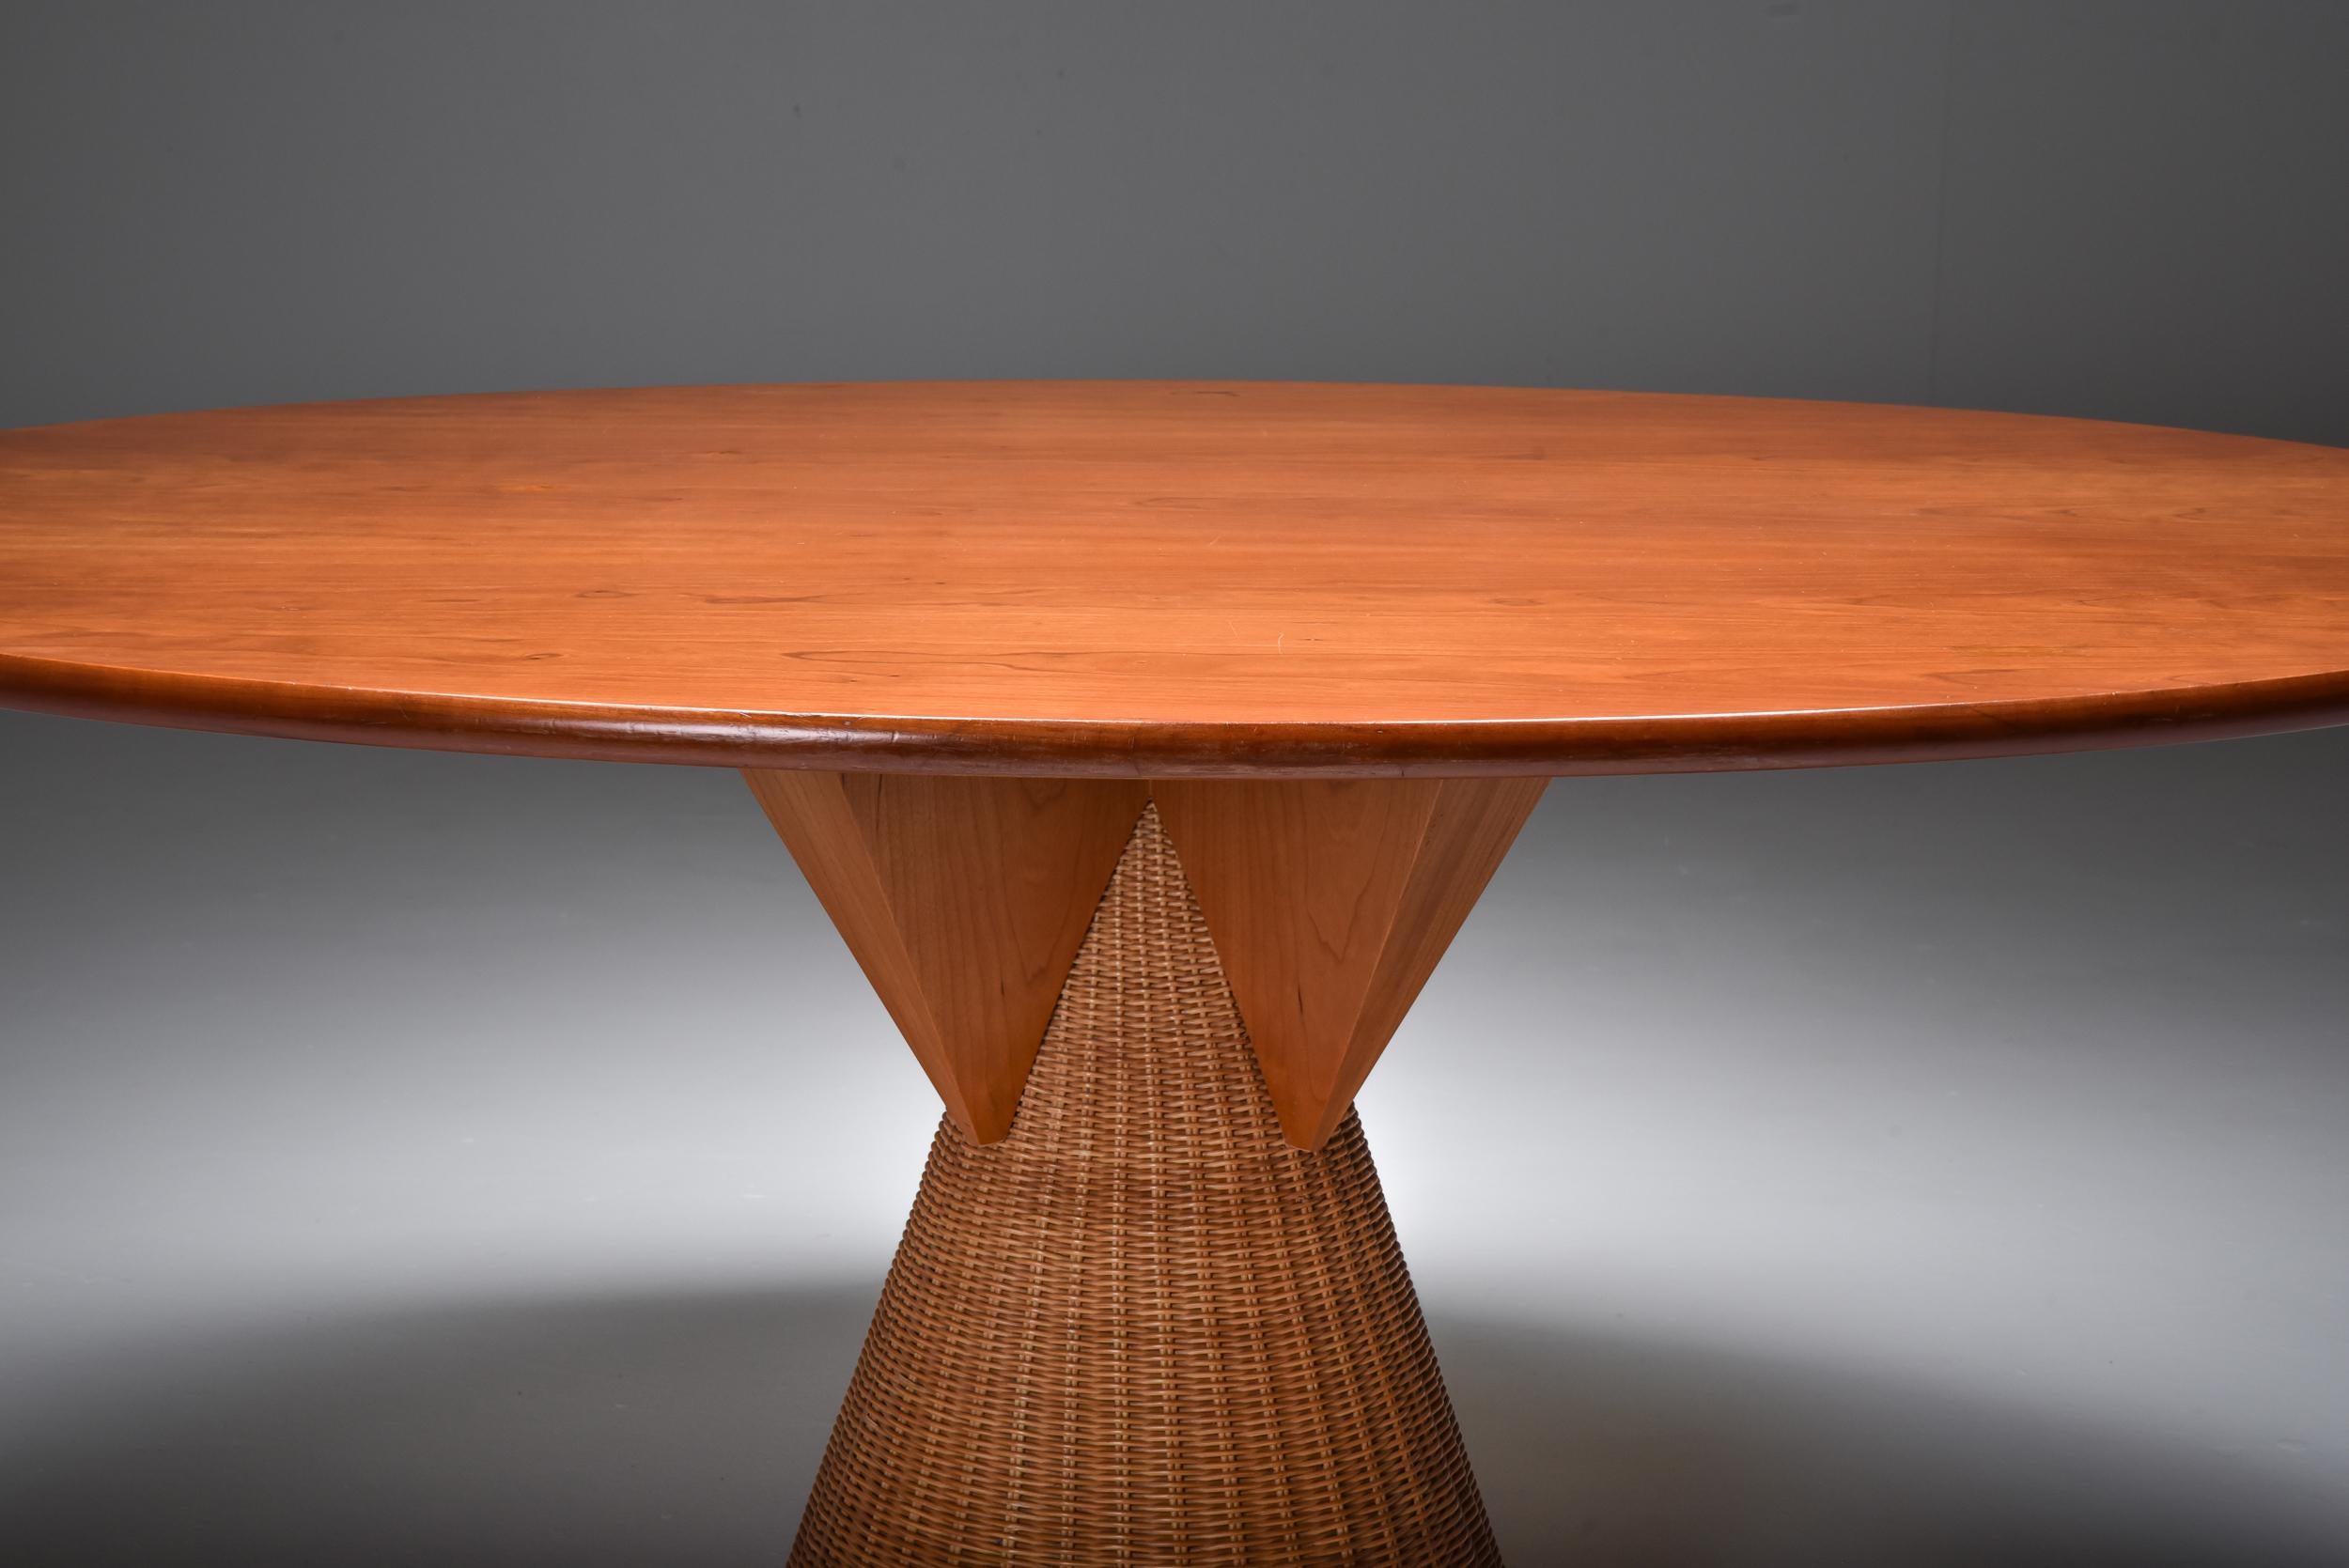 Italian Design Oval Mid-Century Modern Dining Table on a Rattan Base 1